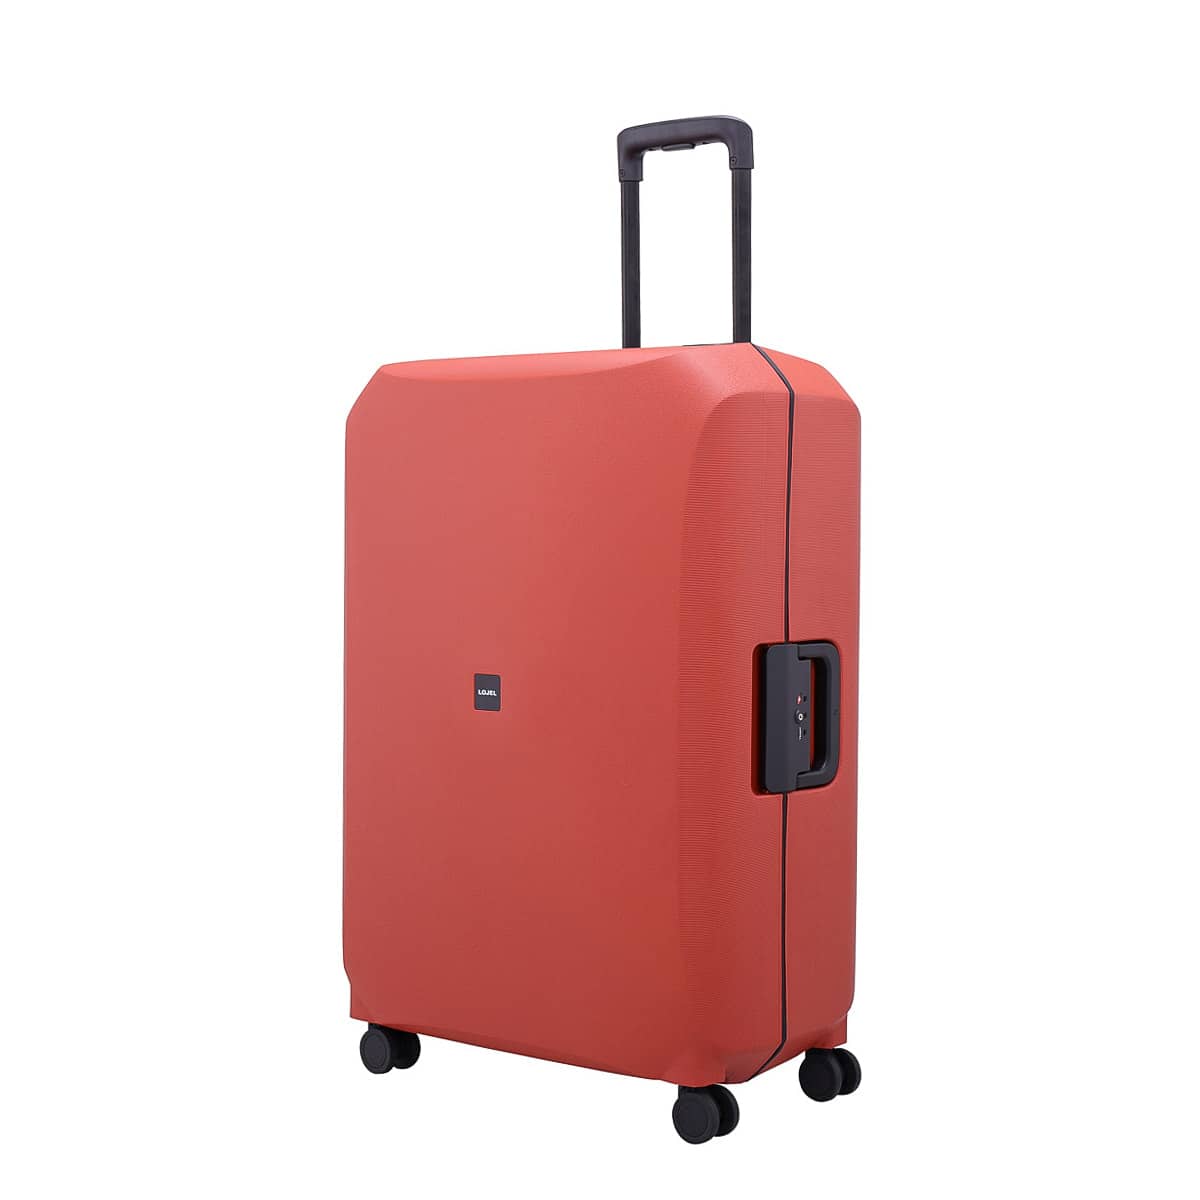 Best Zipperless Suitcase